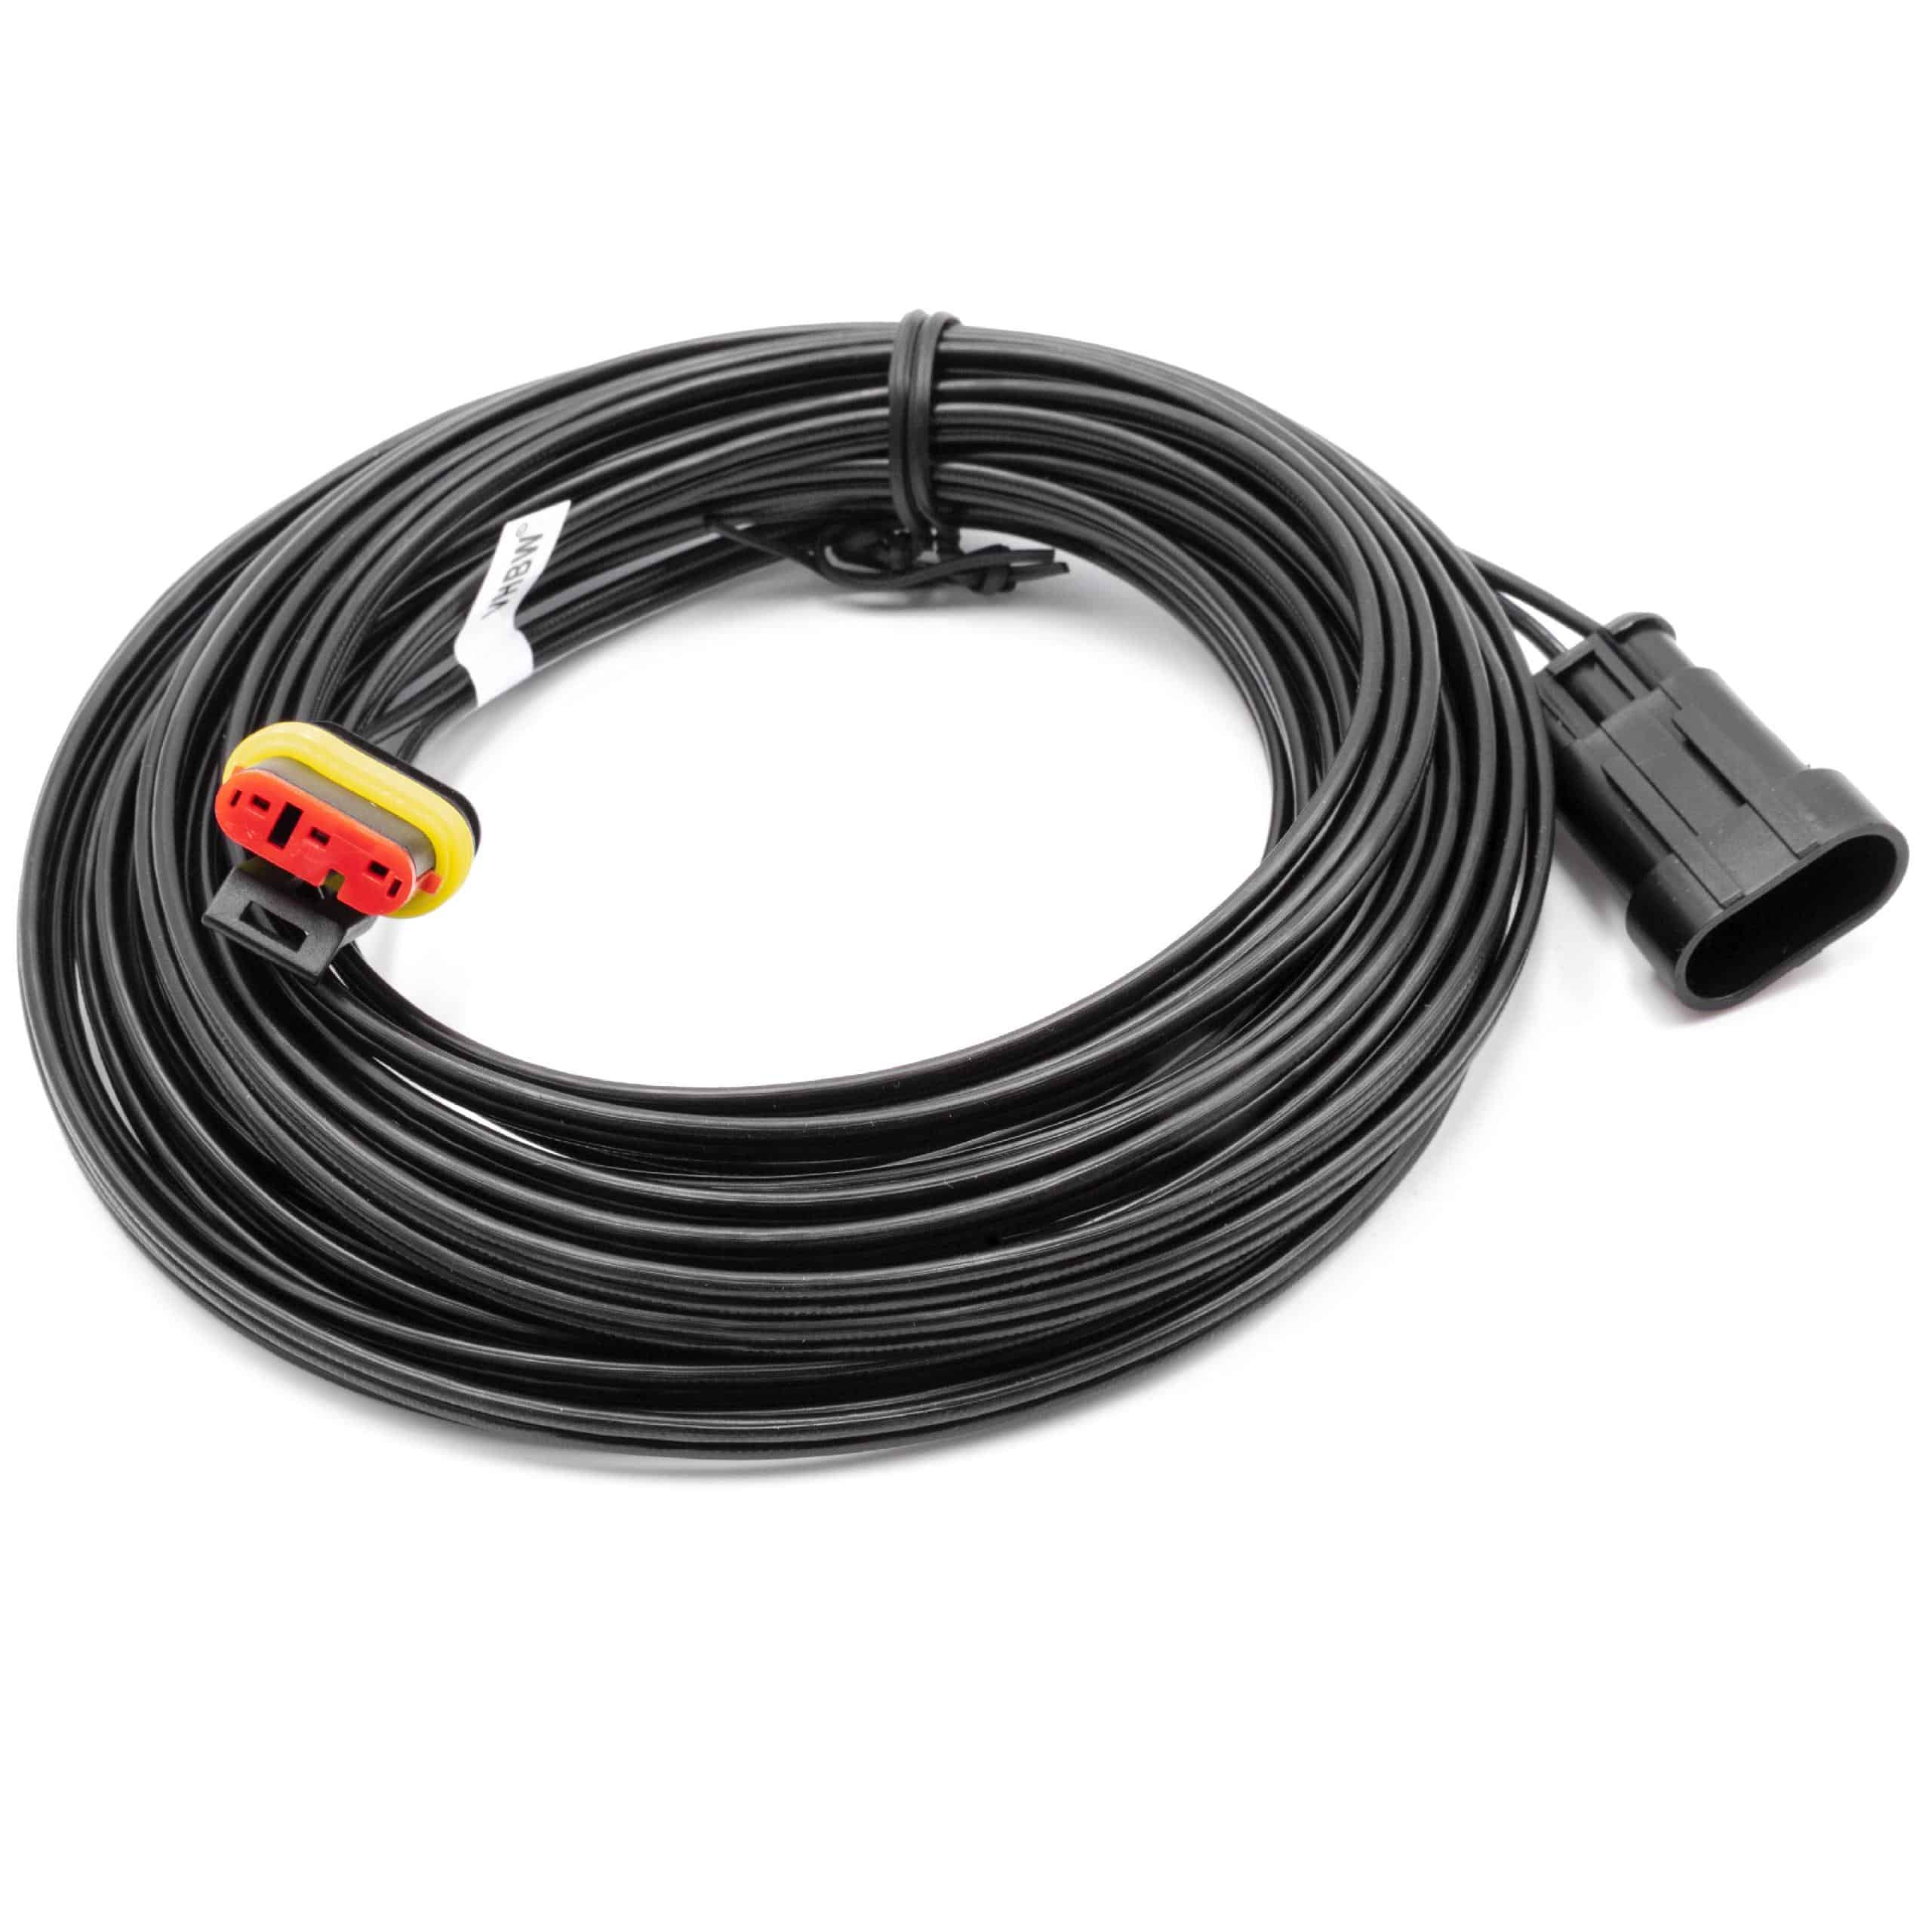 Low Voltage Cable suitable for Gardena sileno city, minimo / Husqvarna Automower 310, 105 etc. 10 m